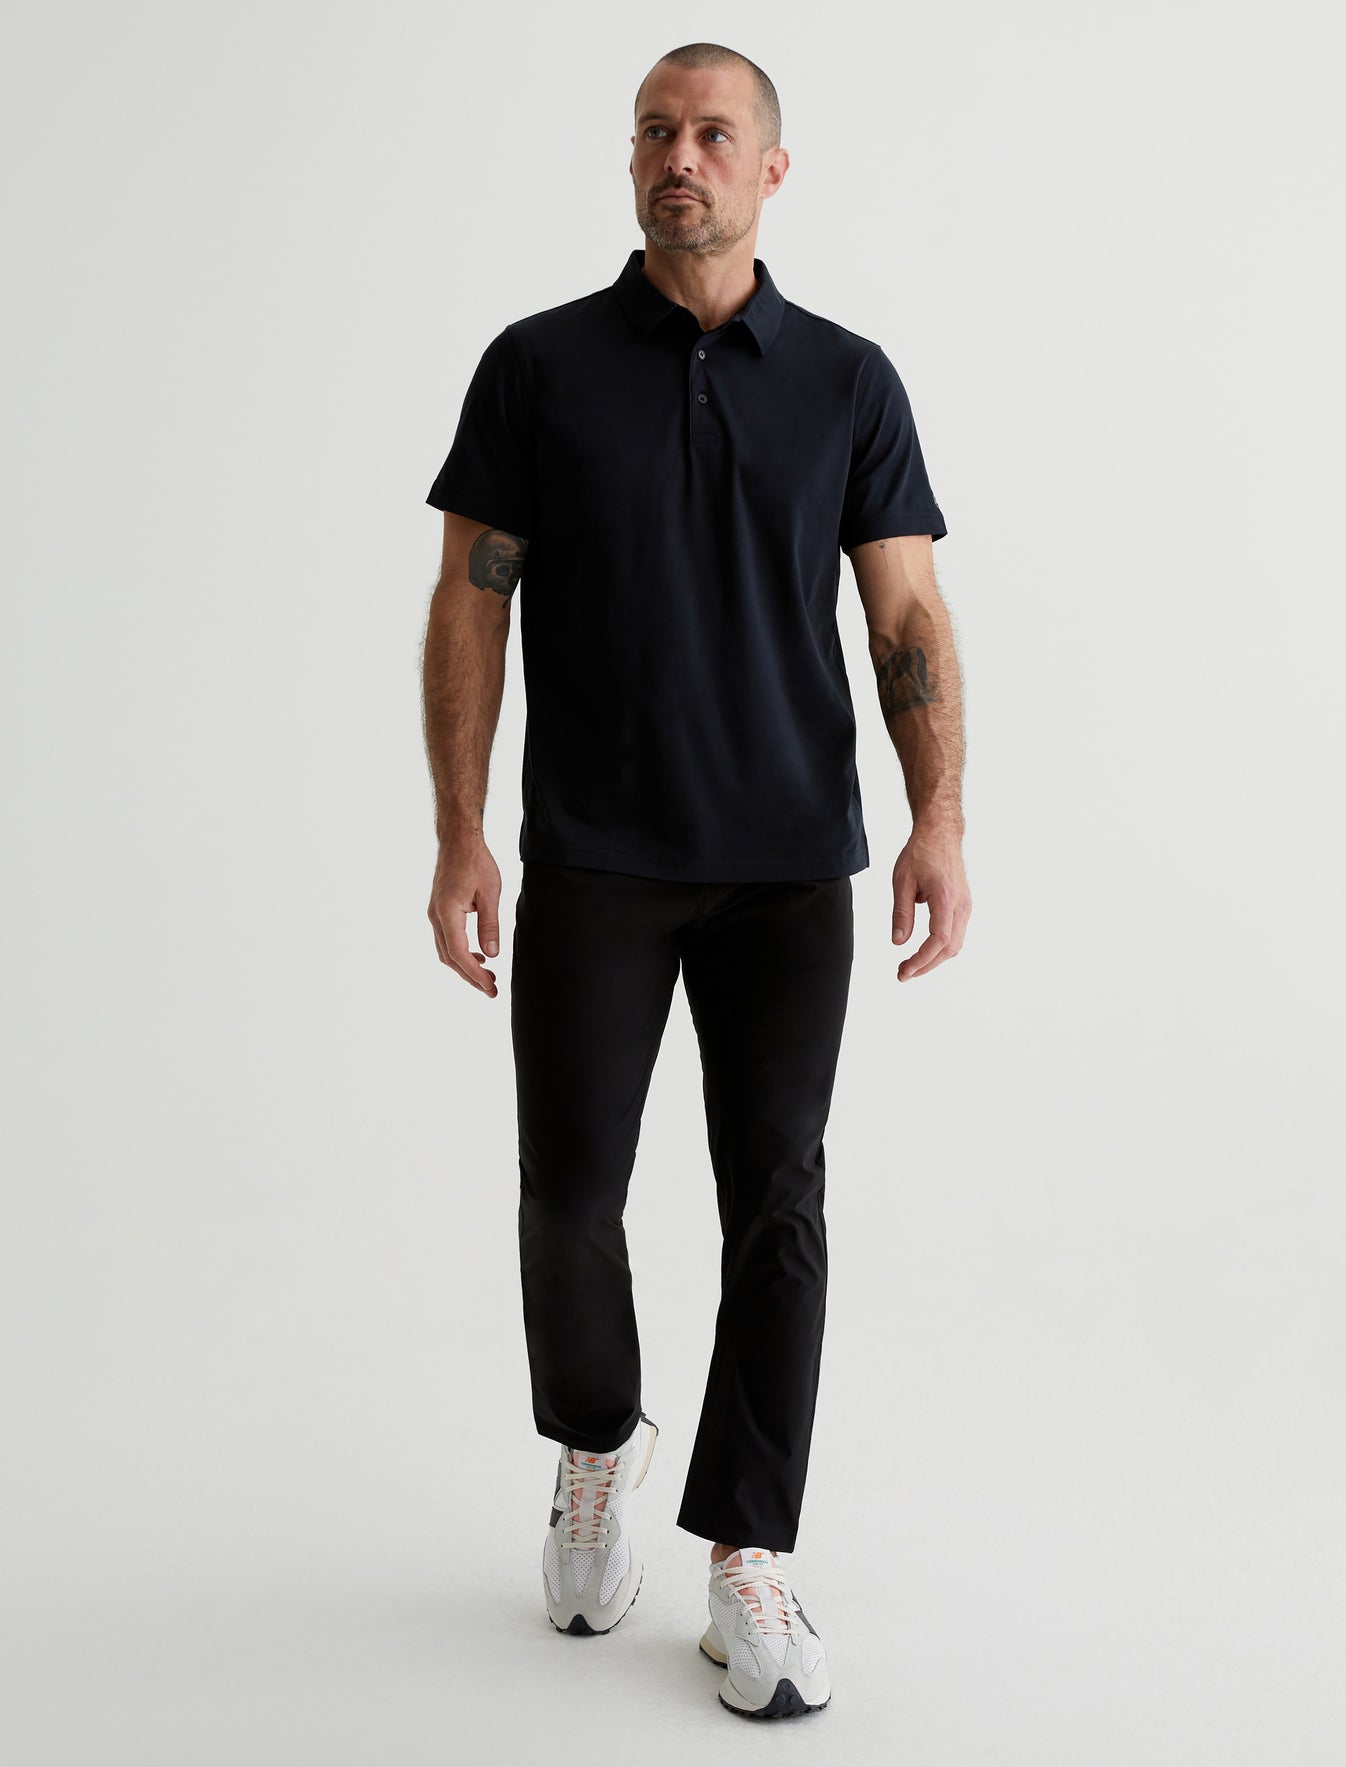 Ace S/S Polo True Black Classic Fit Short Sleeve Polo T-Shirt Men Top Photo 4